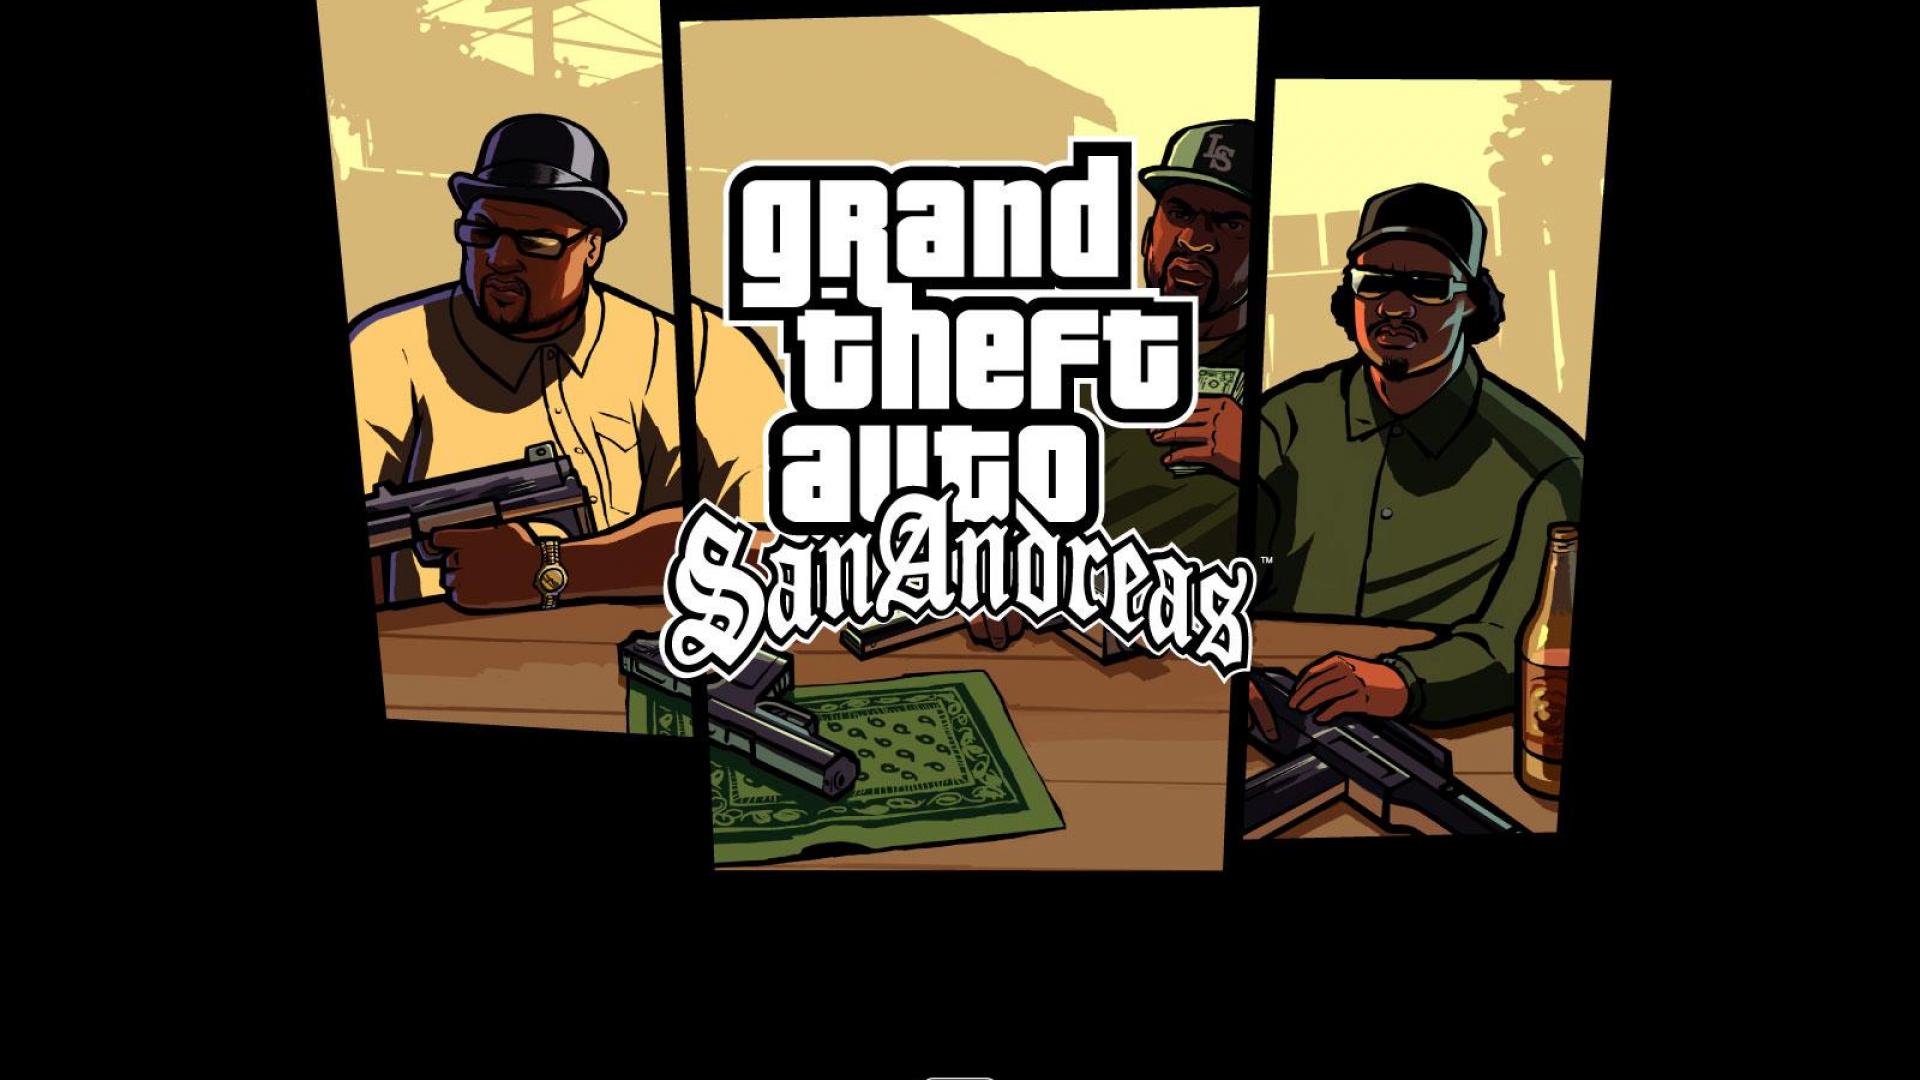 Grand Theft Auto Video Games Rockstar Games Grand Theft Auto San Andreas 1920x1080